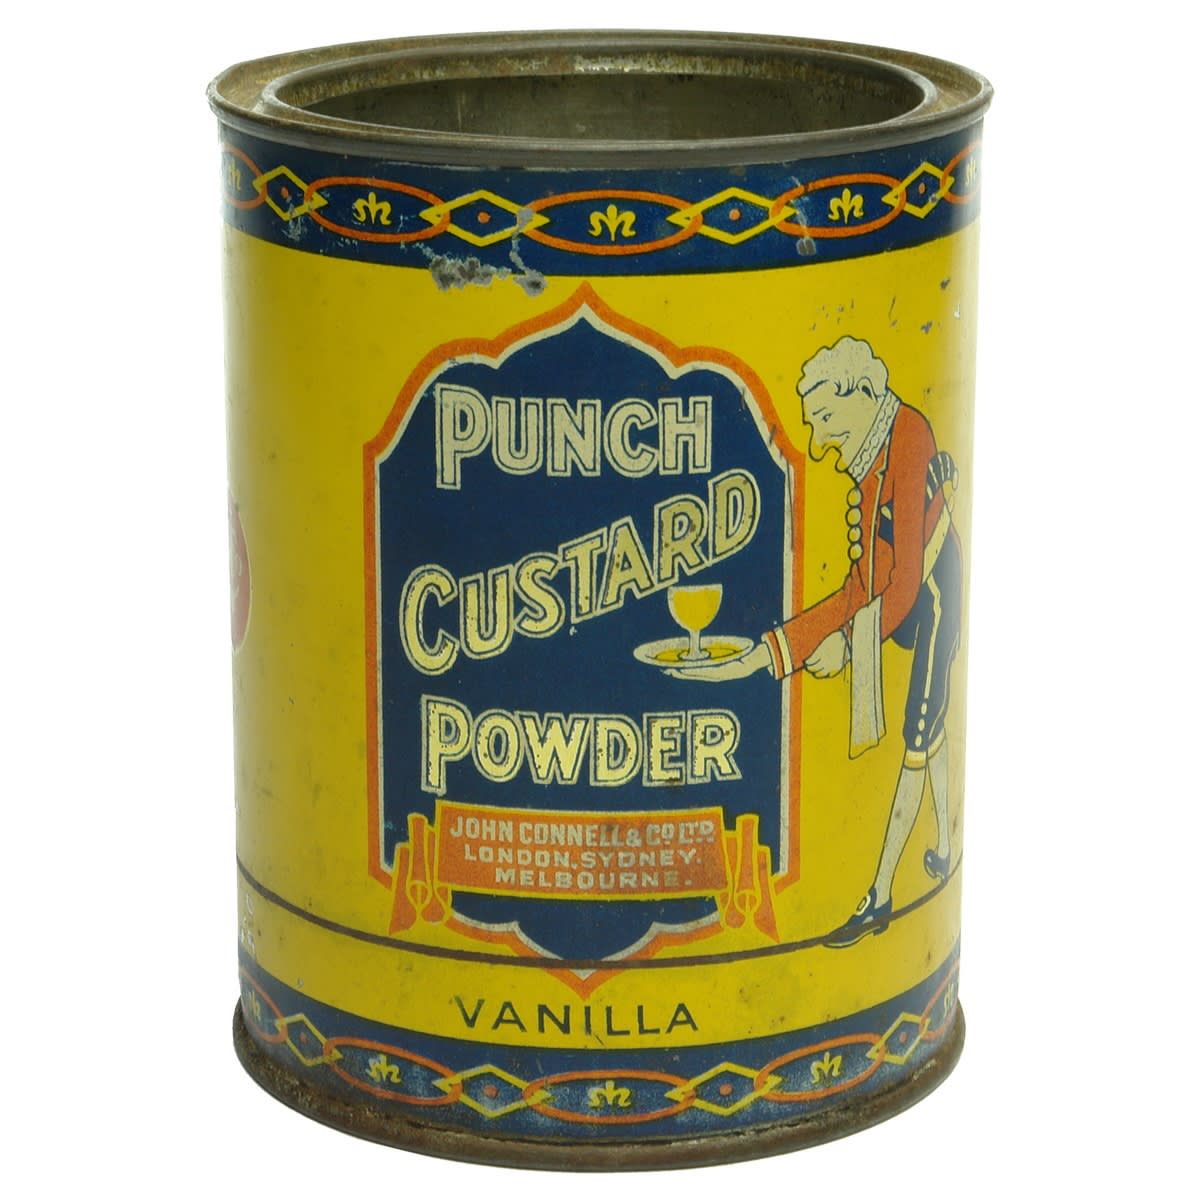 Tin. Punch Custard Powder. John Connell & Co Ltd London Sydney Melbourne. Vanilla.